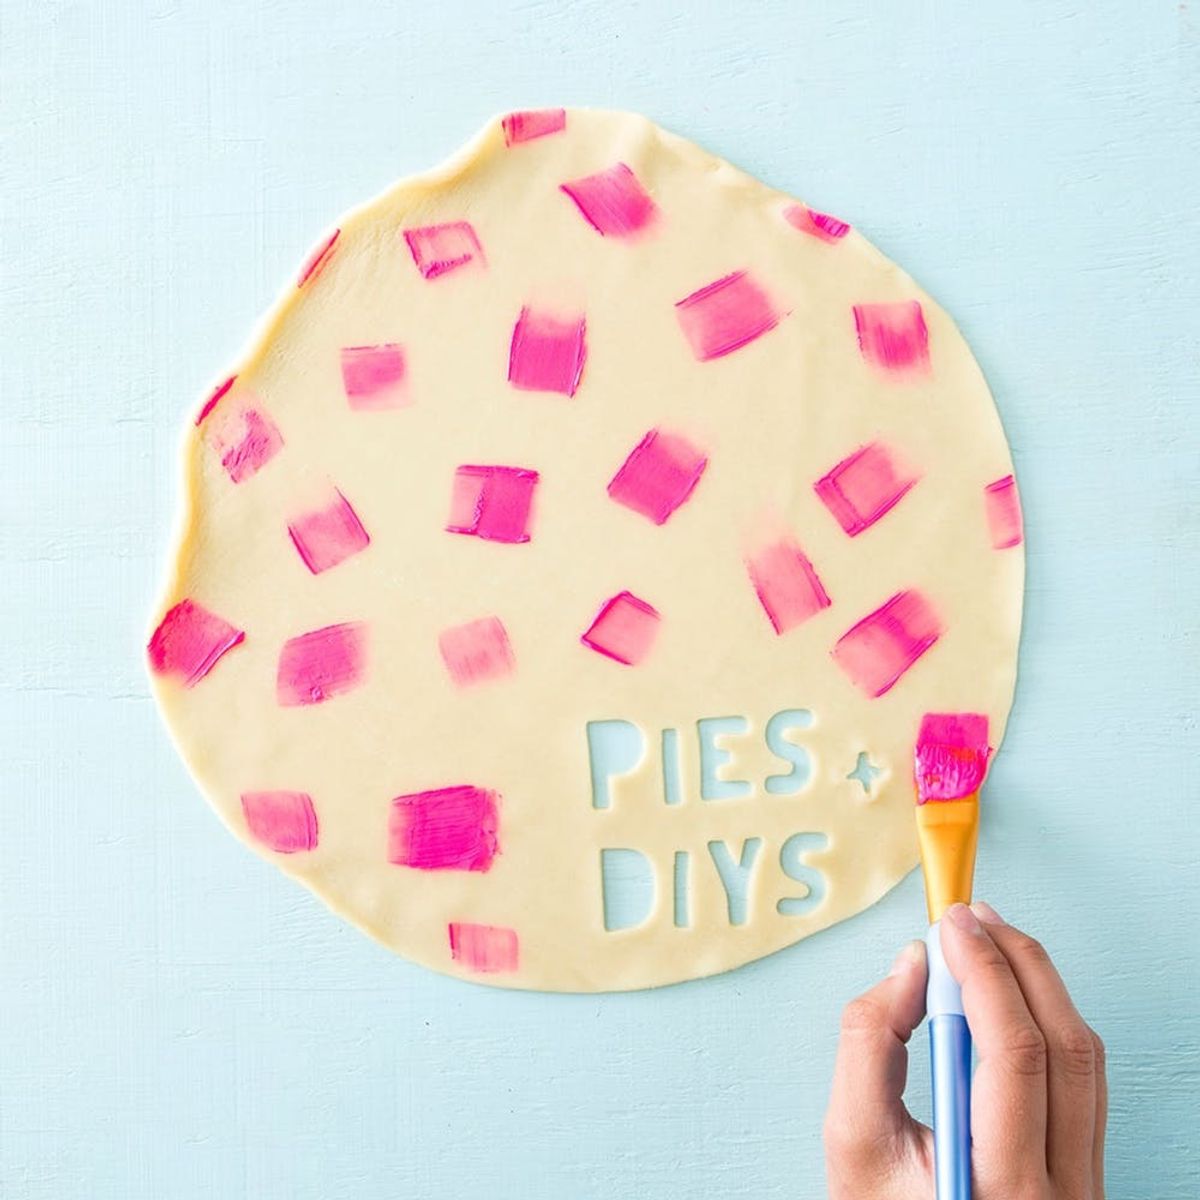 Pies + DIYs: How to Upgrade Your Denim